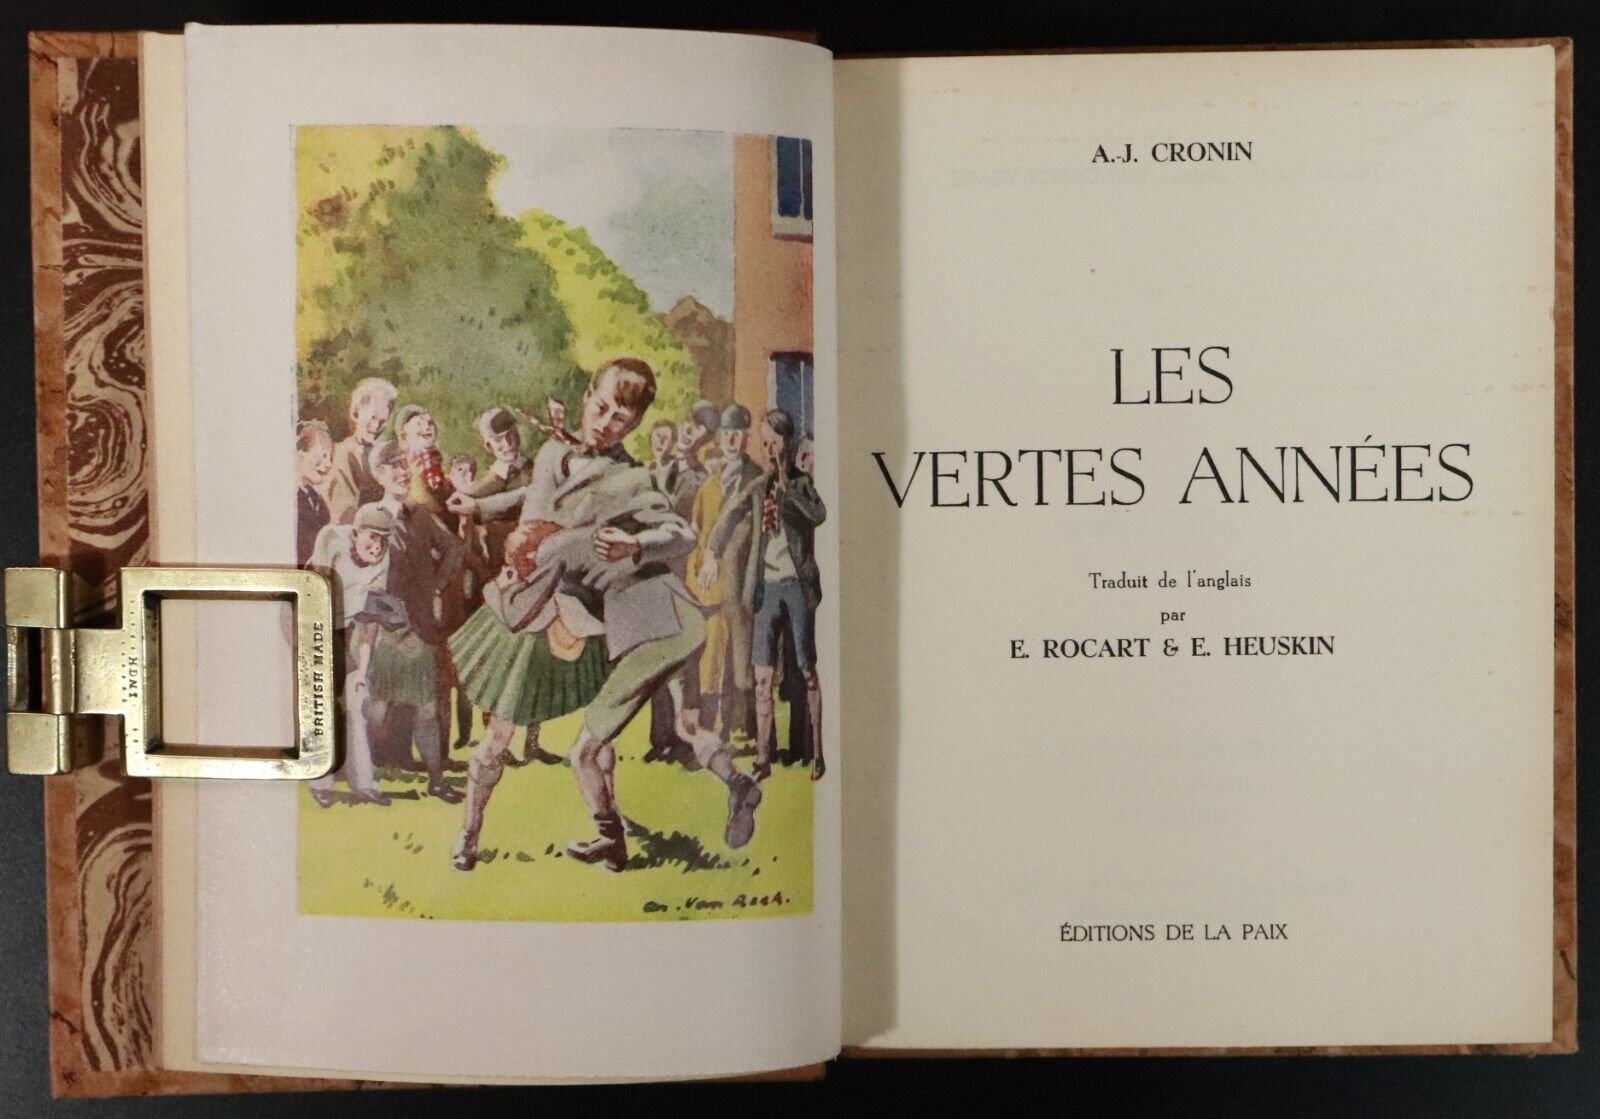 1945 Les Vertes Annees by AJ Cronin Ltd Edition French Fiction Book Fine Binding - 0